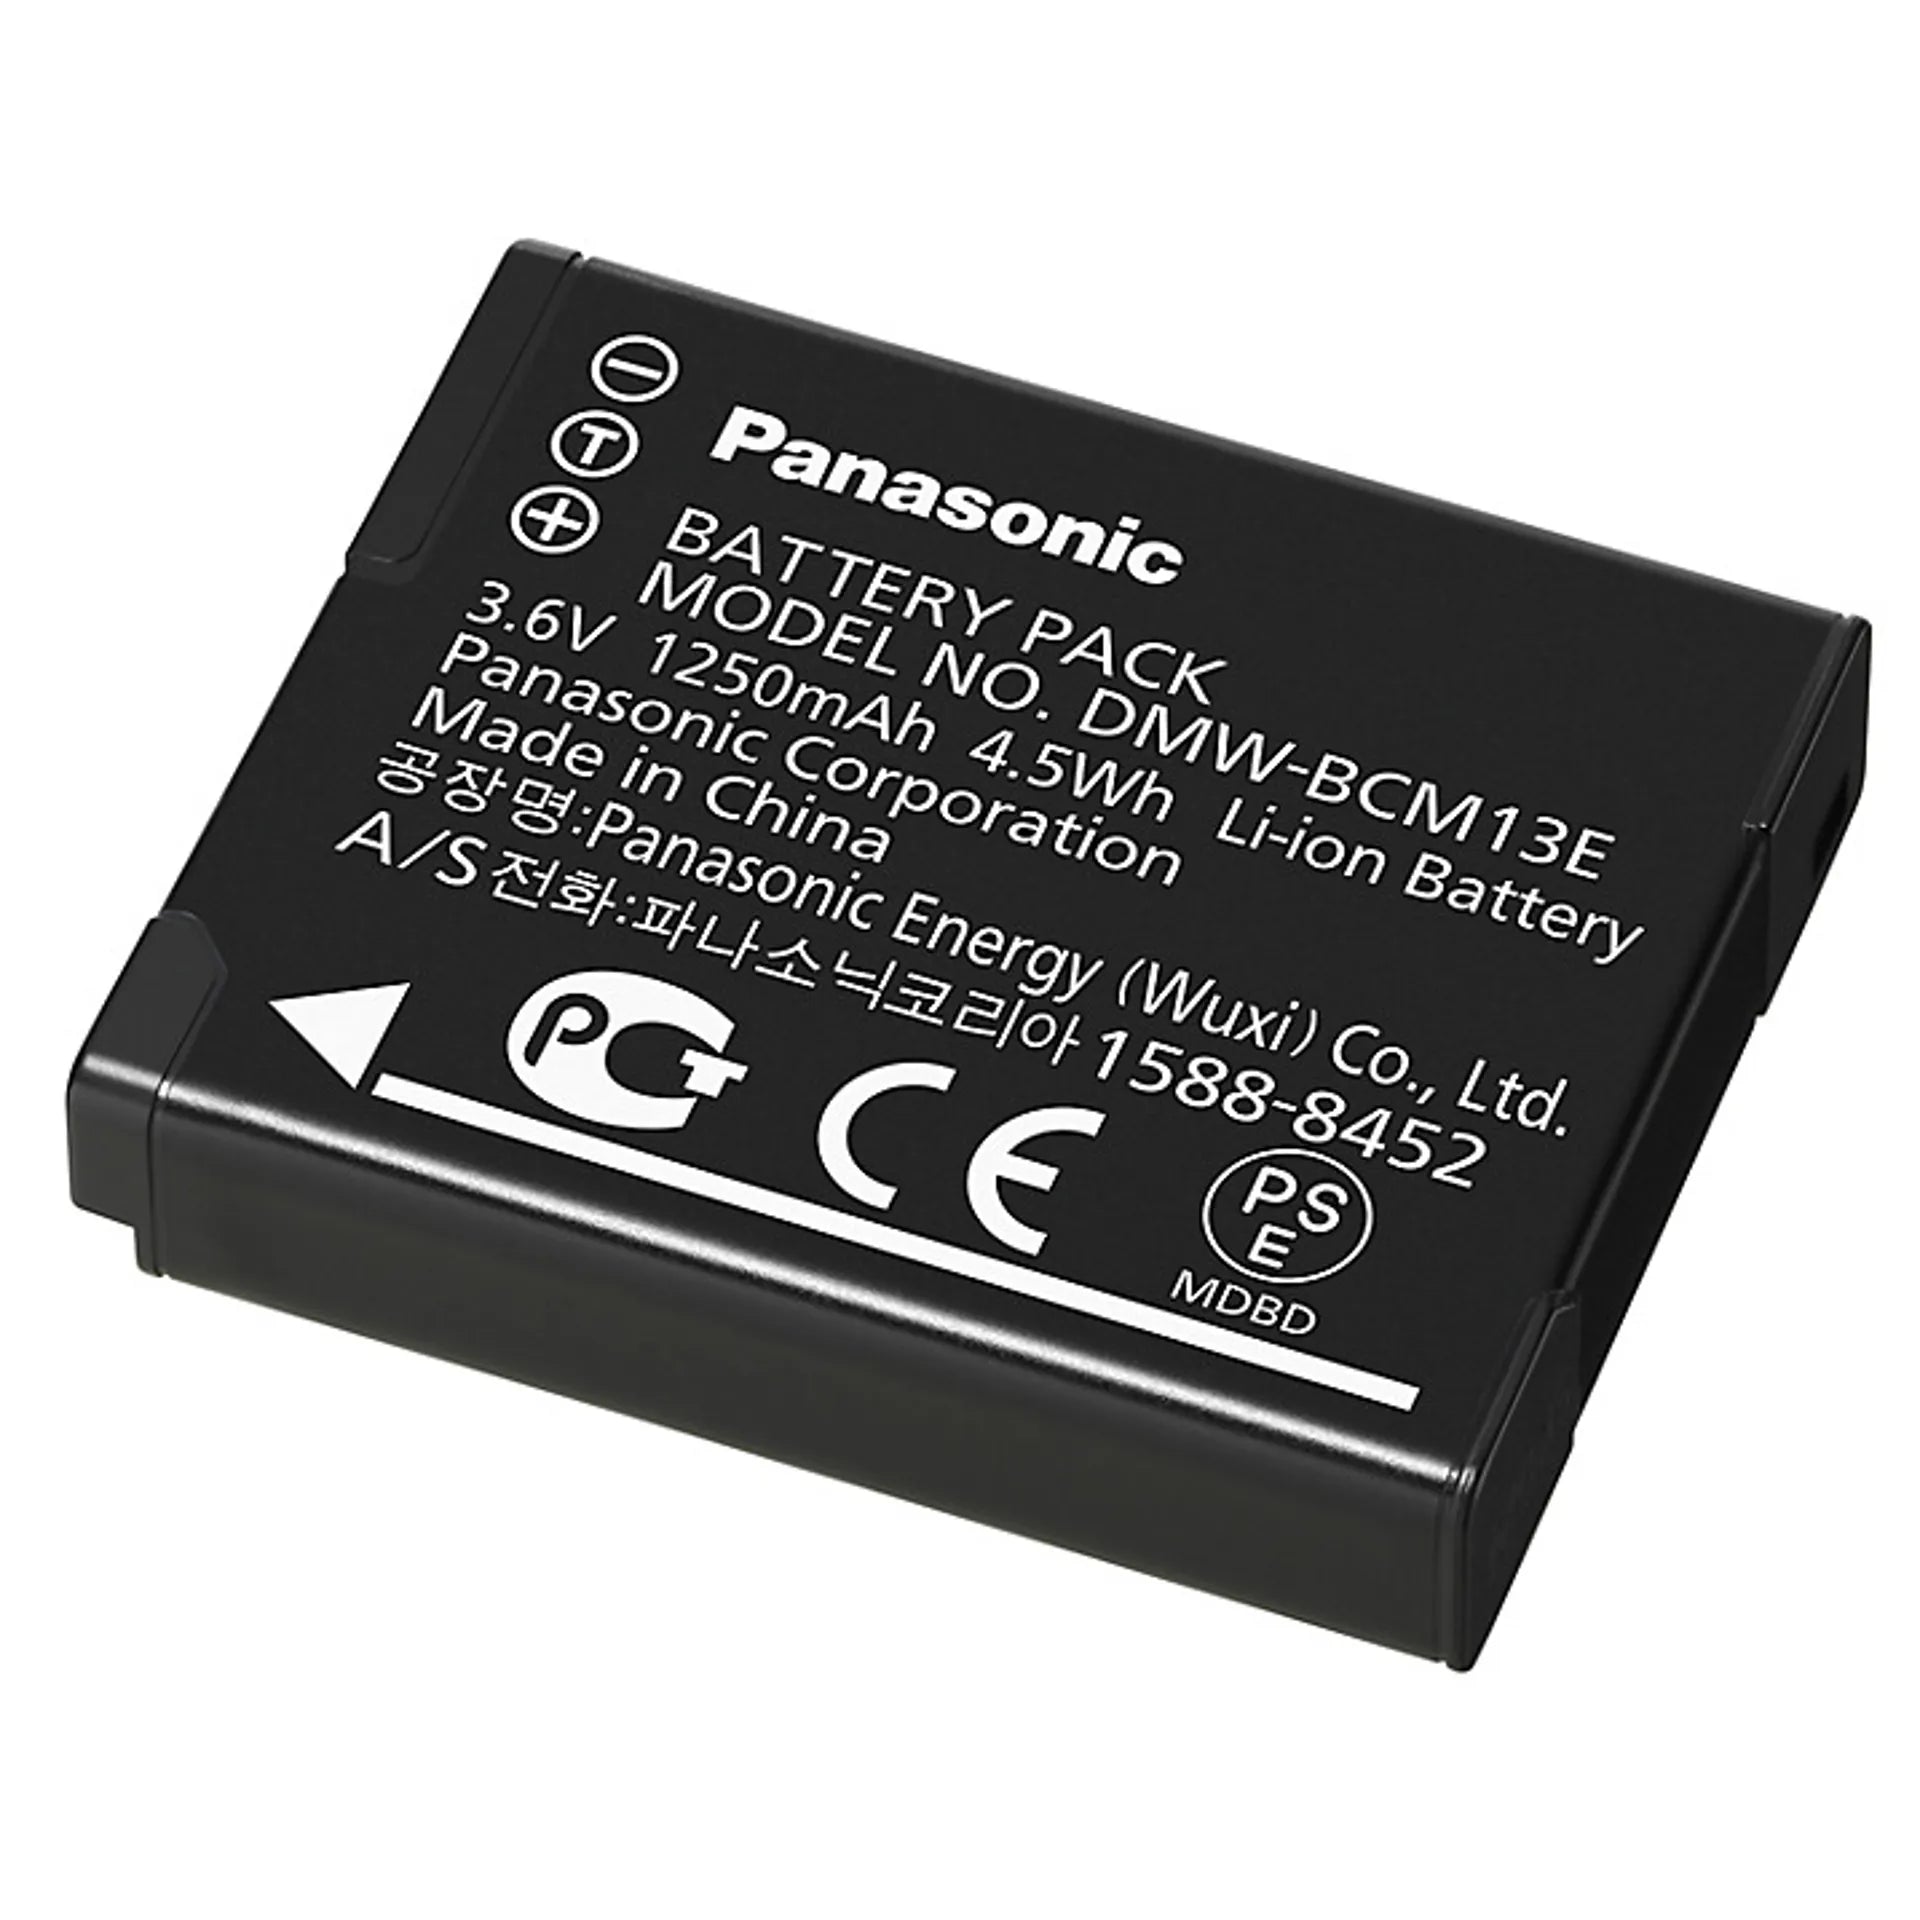 Panasonic TZ70 Leather Case and Battery Accessory Kit - Good